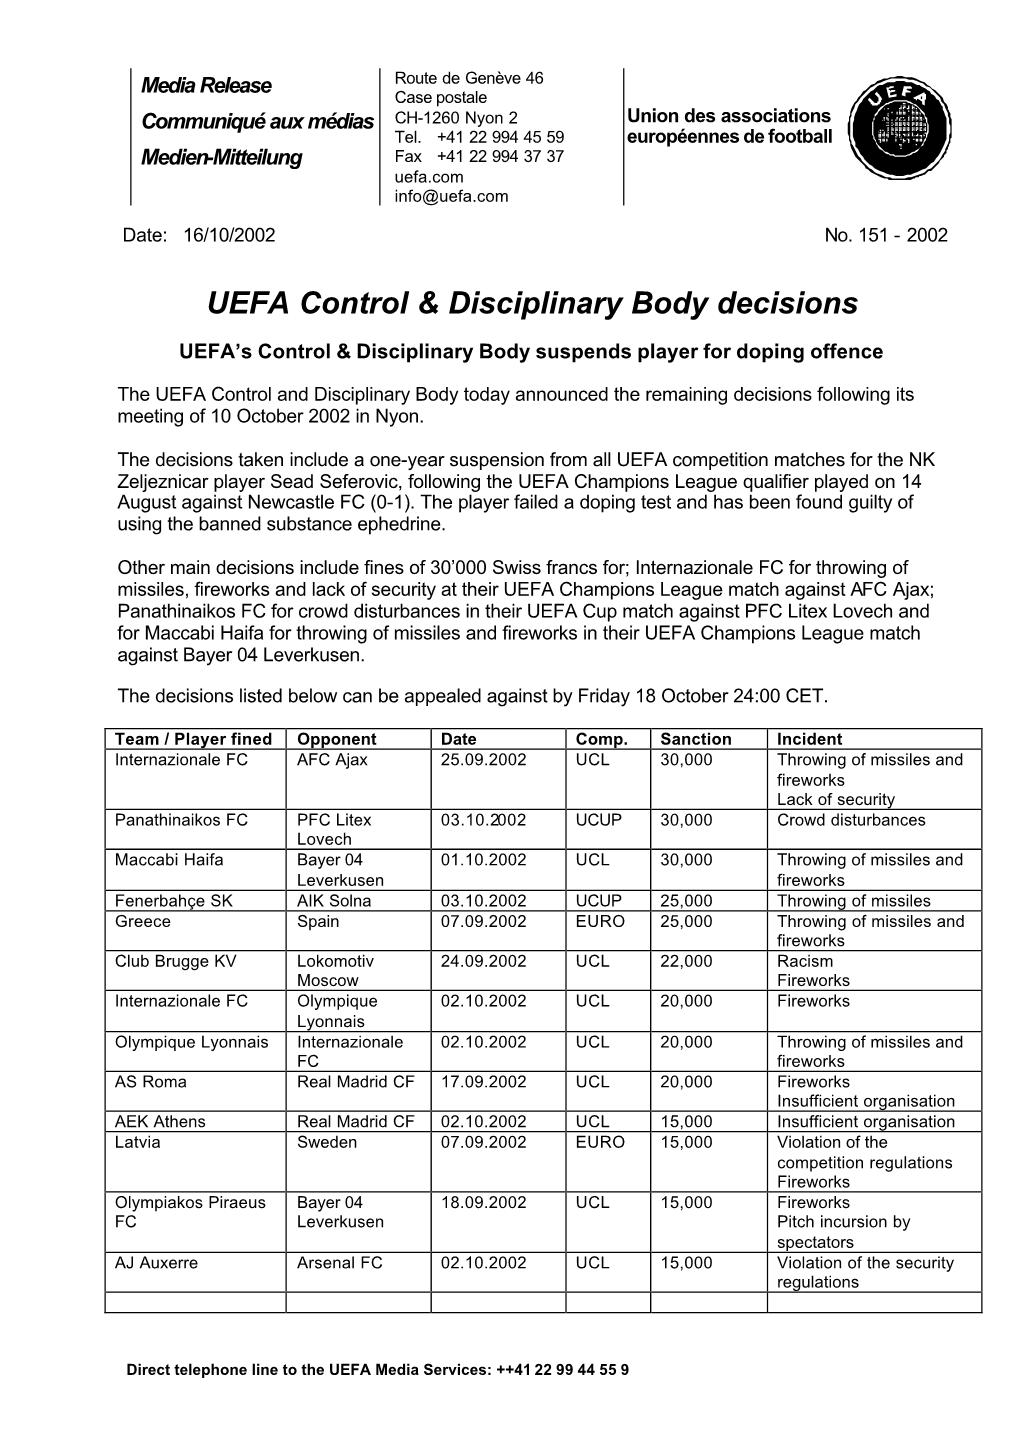 UEFA Control & Disciplinary Body Decisions